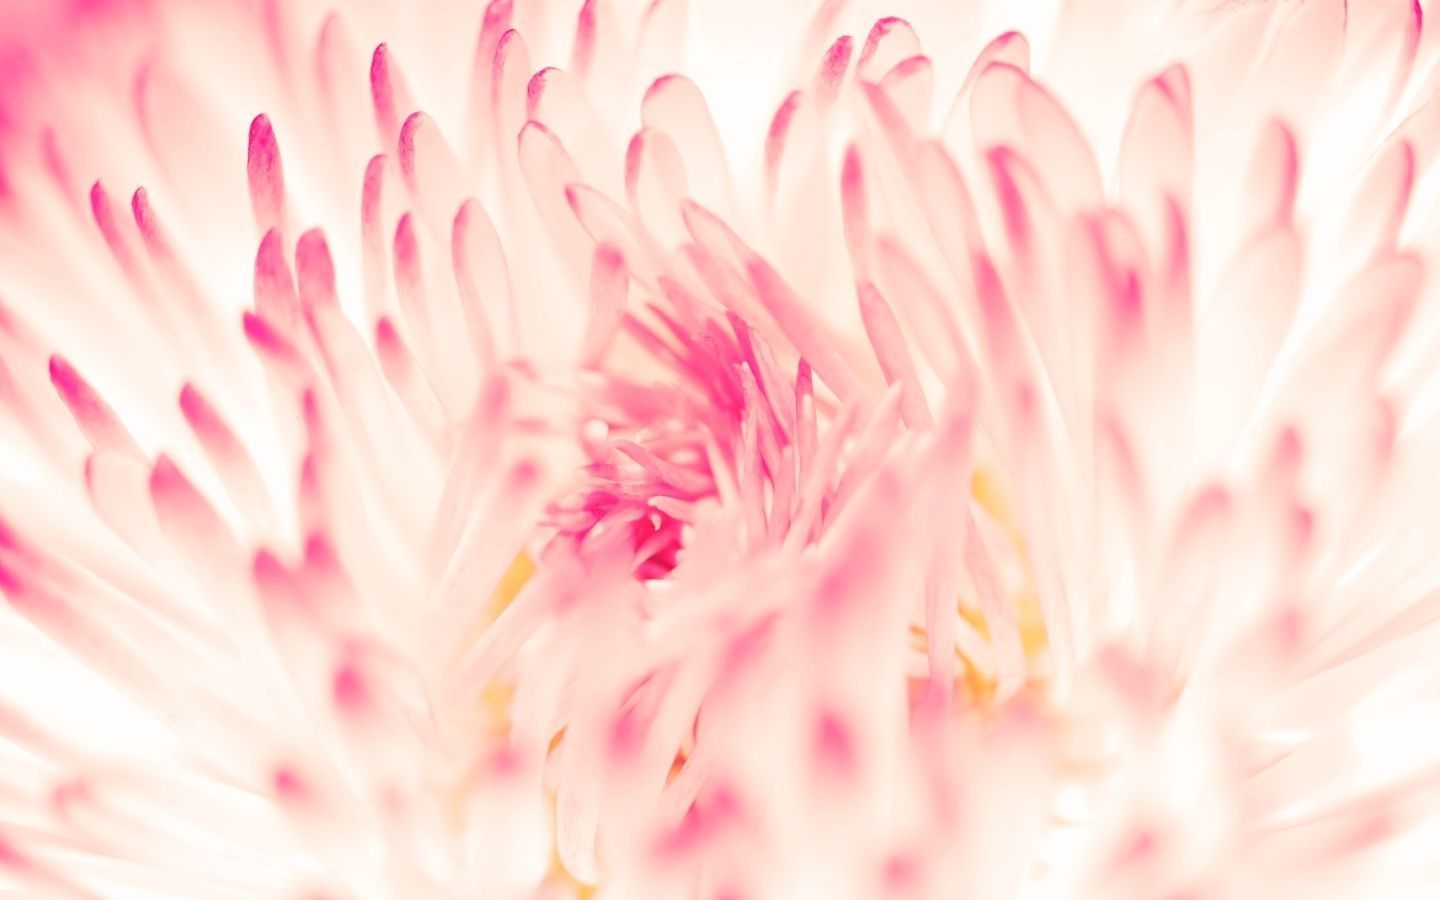 Spring Daisy Flower Mac Wallpaper Download. Free Mac Wallpaper